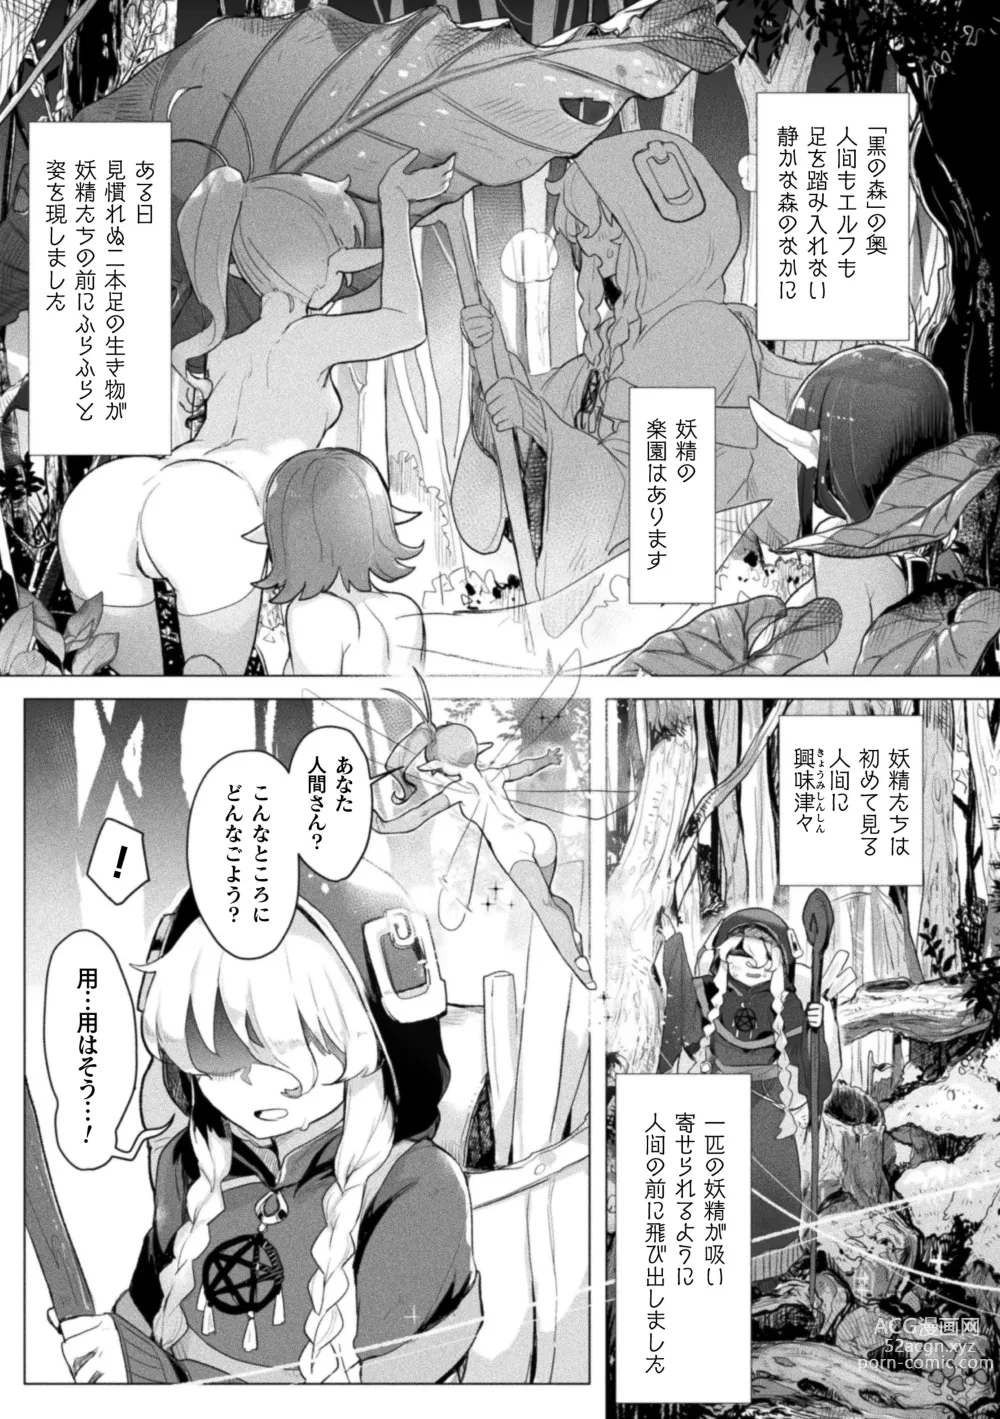 Page 25 of manga 2D Comic Magazine Ishukan Yuri Ecchi Vol. 1